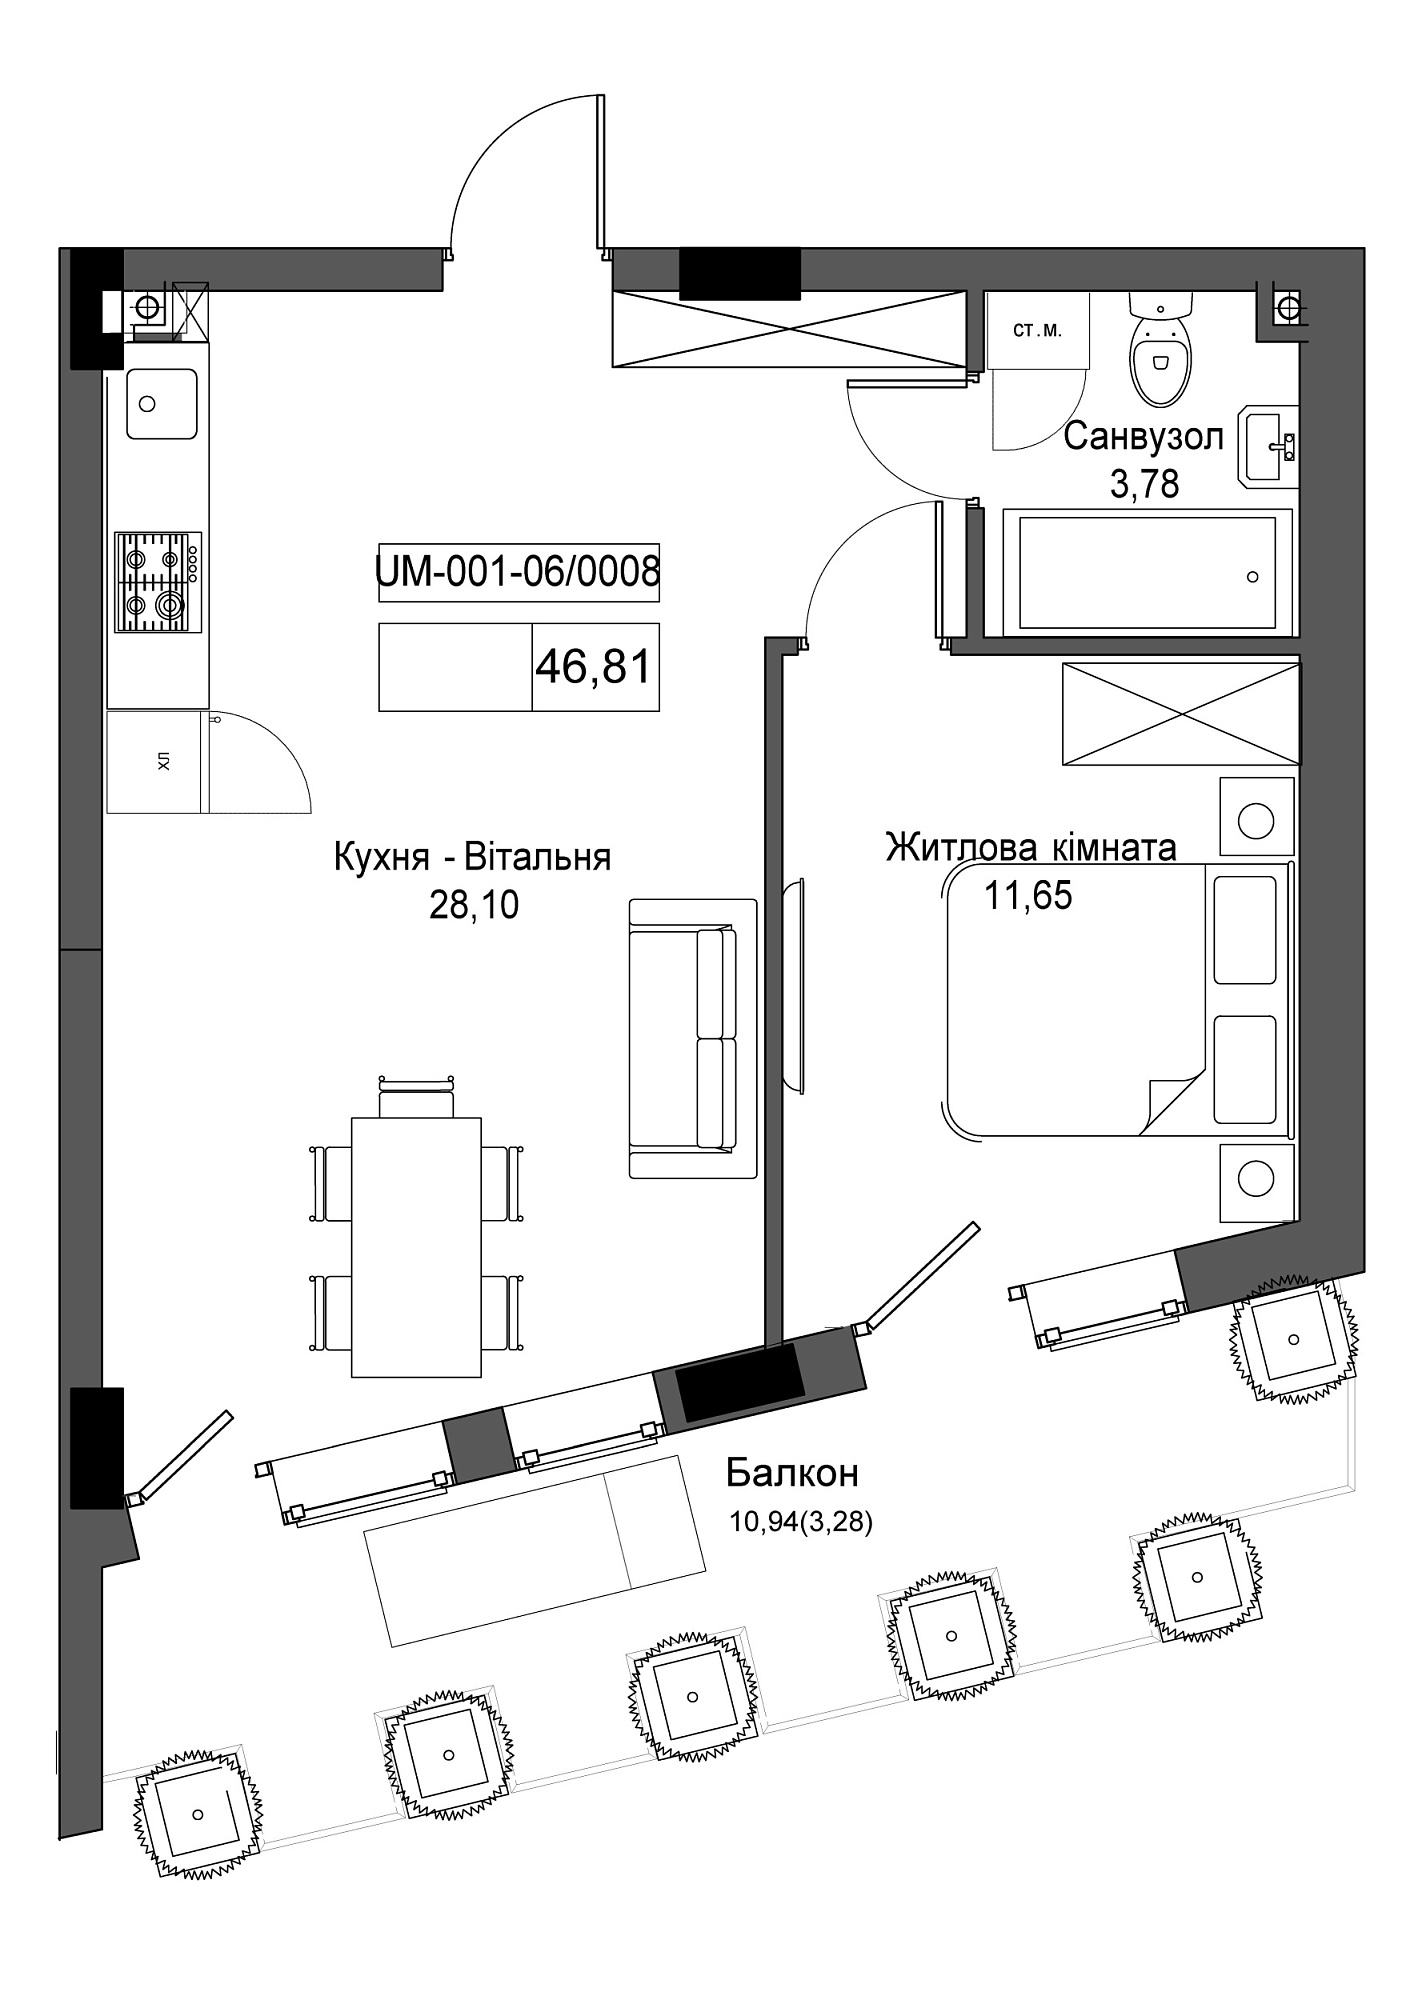 Planning 1-rm flats area 46.81m2, UM-001-06/0008.